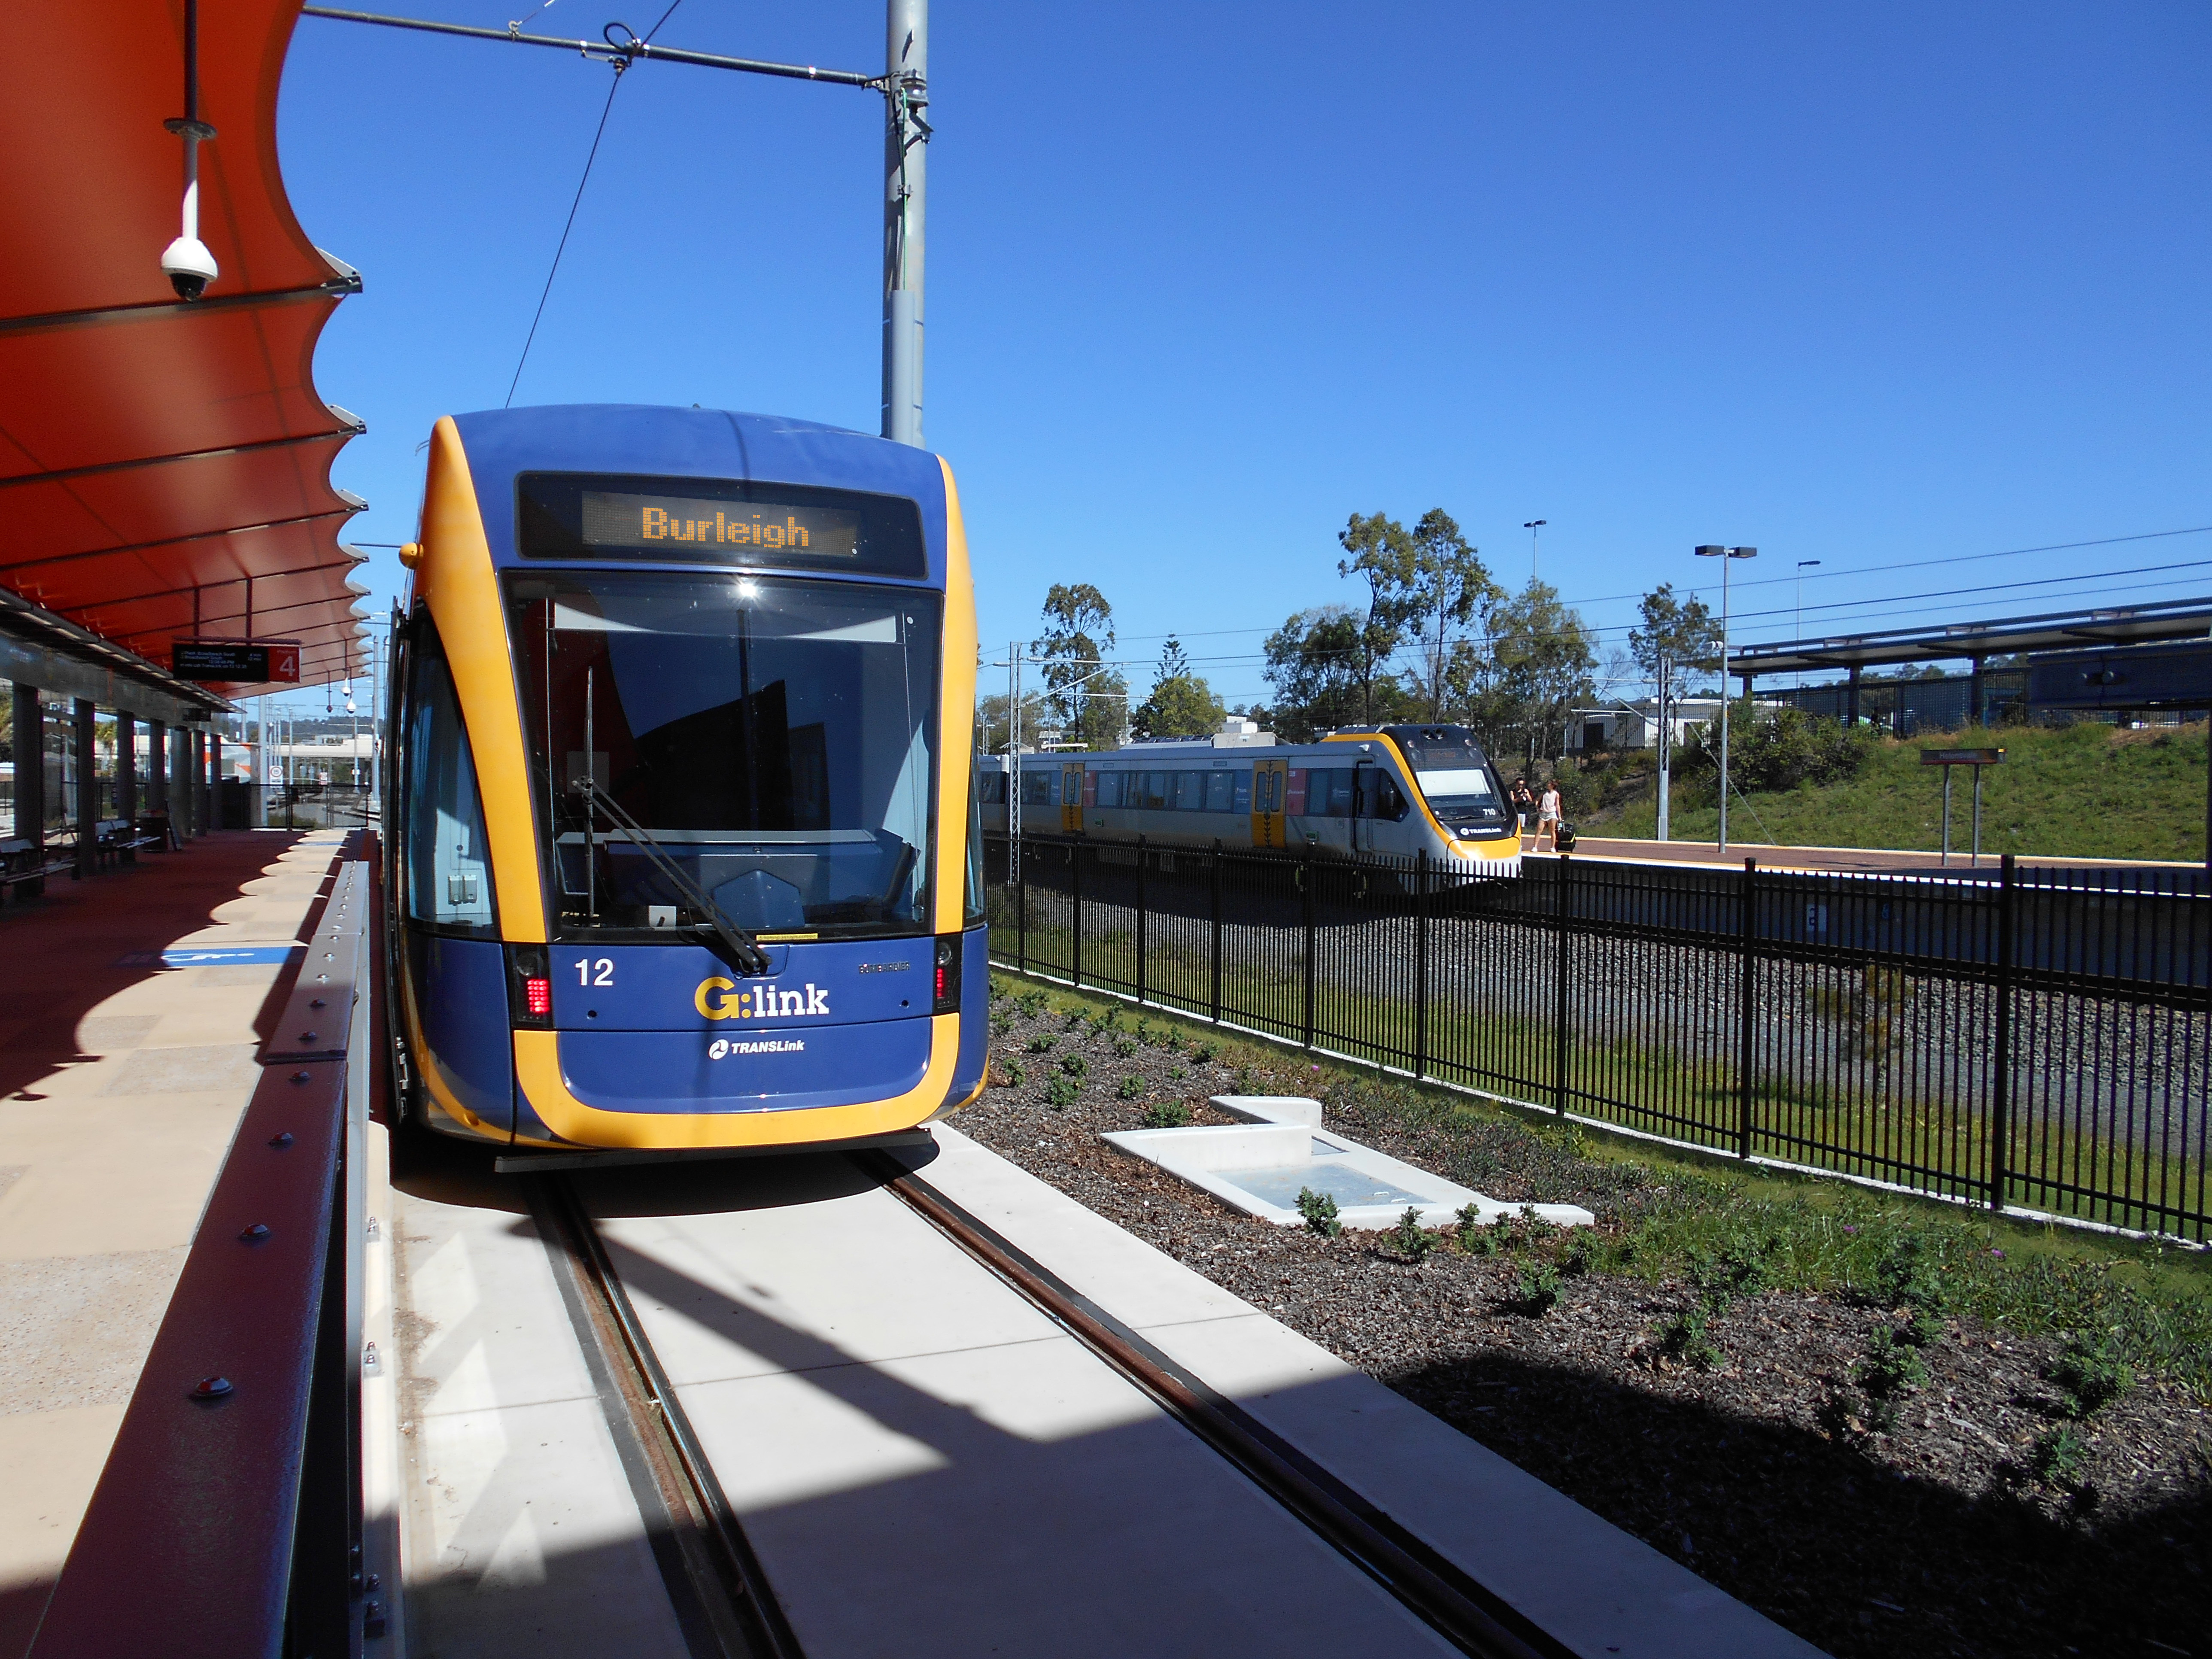 Gold Coast Light Rail Tram with 'Burleigh' destination